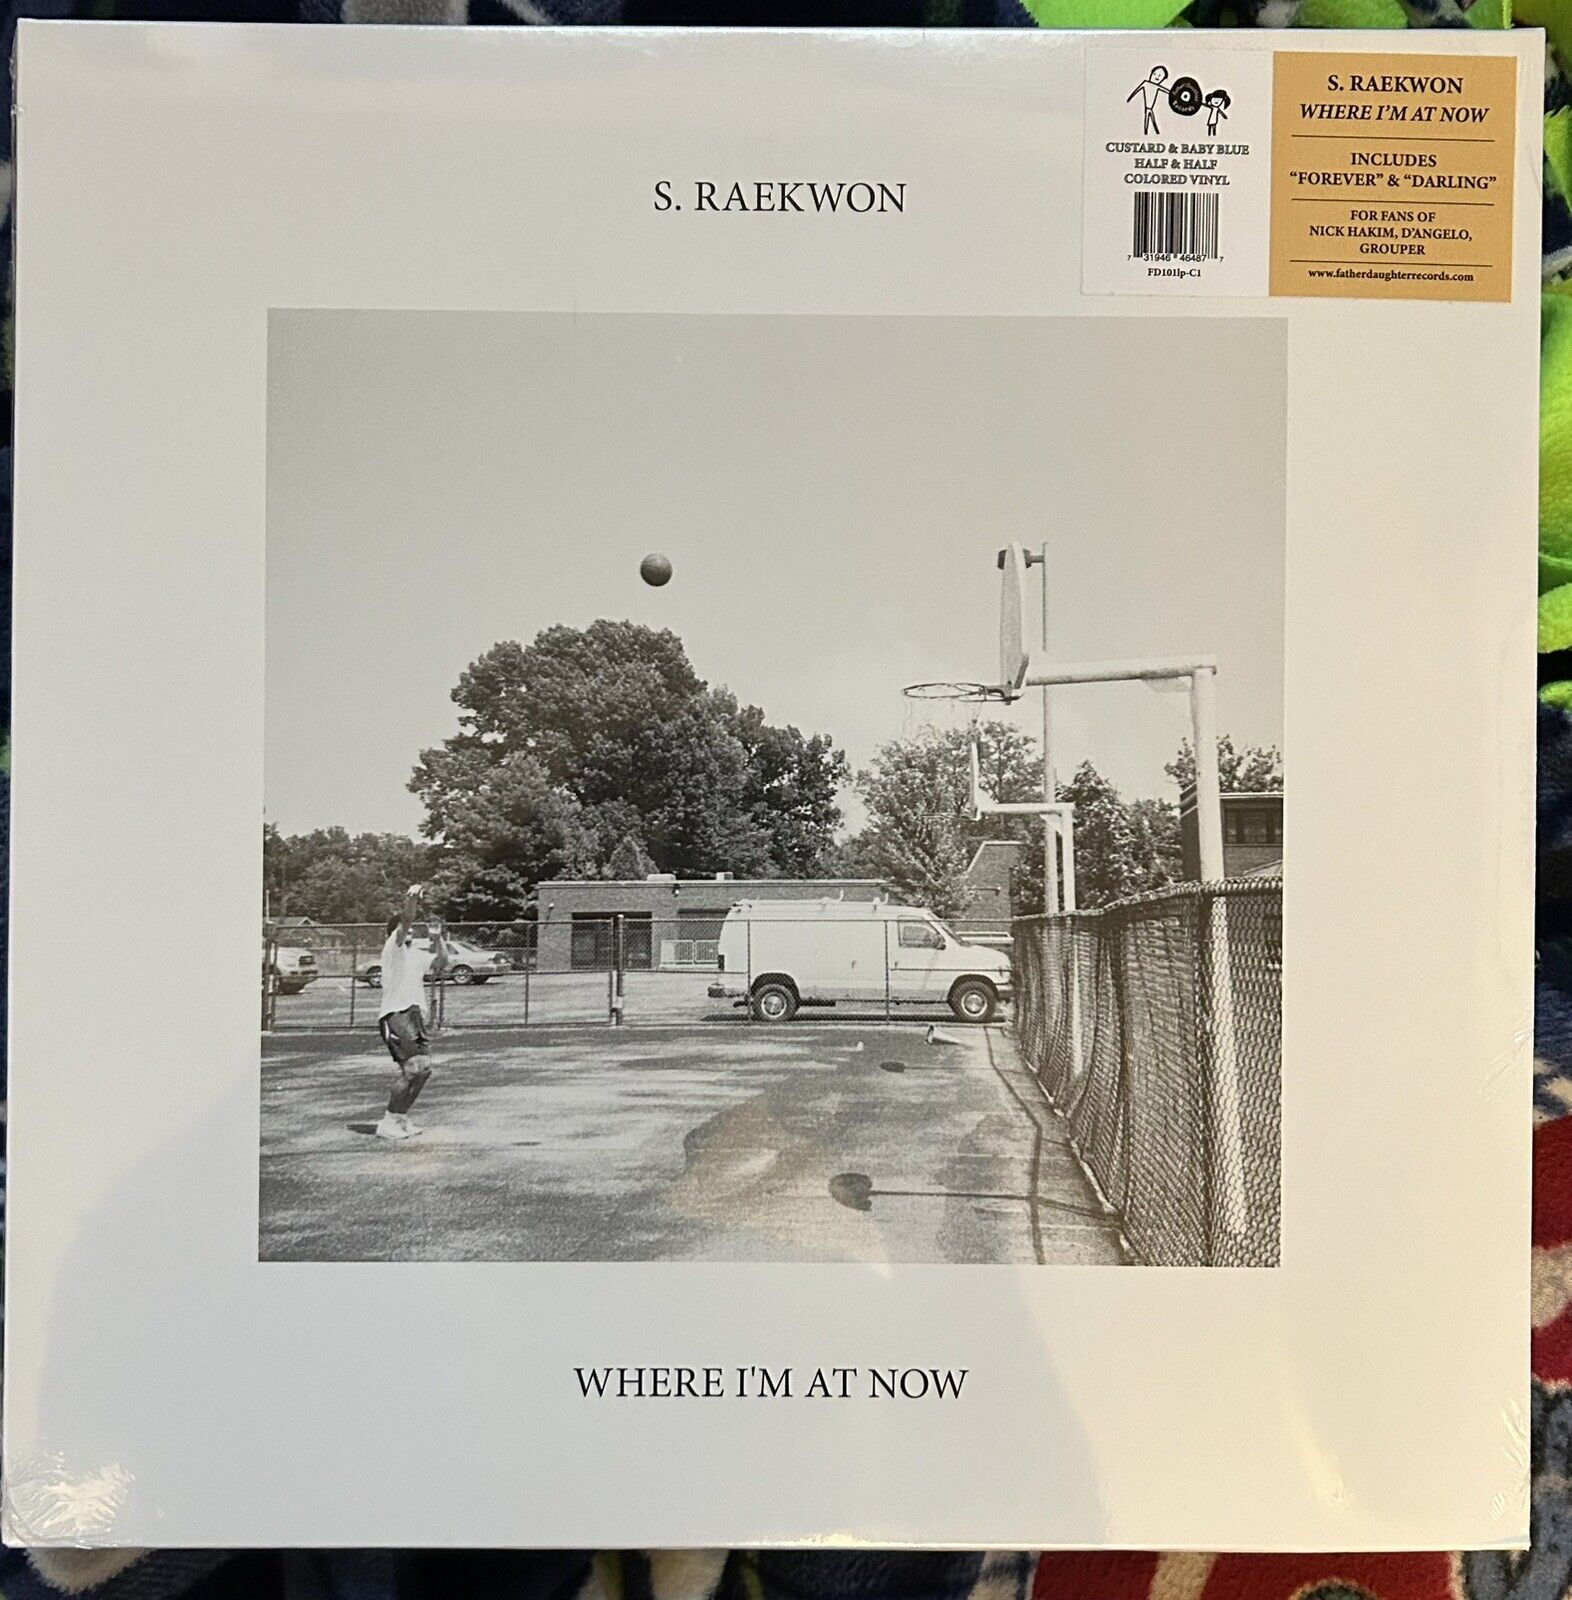 S. RAEKWON - Where I'm At Now NEW BLUE & CUSTARD VINYL LP R&B D’Angelo Grouper